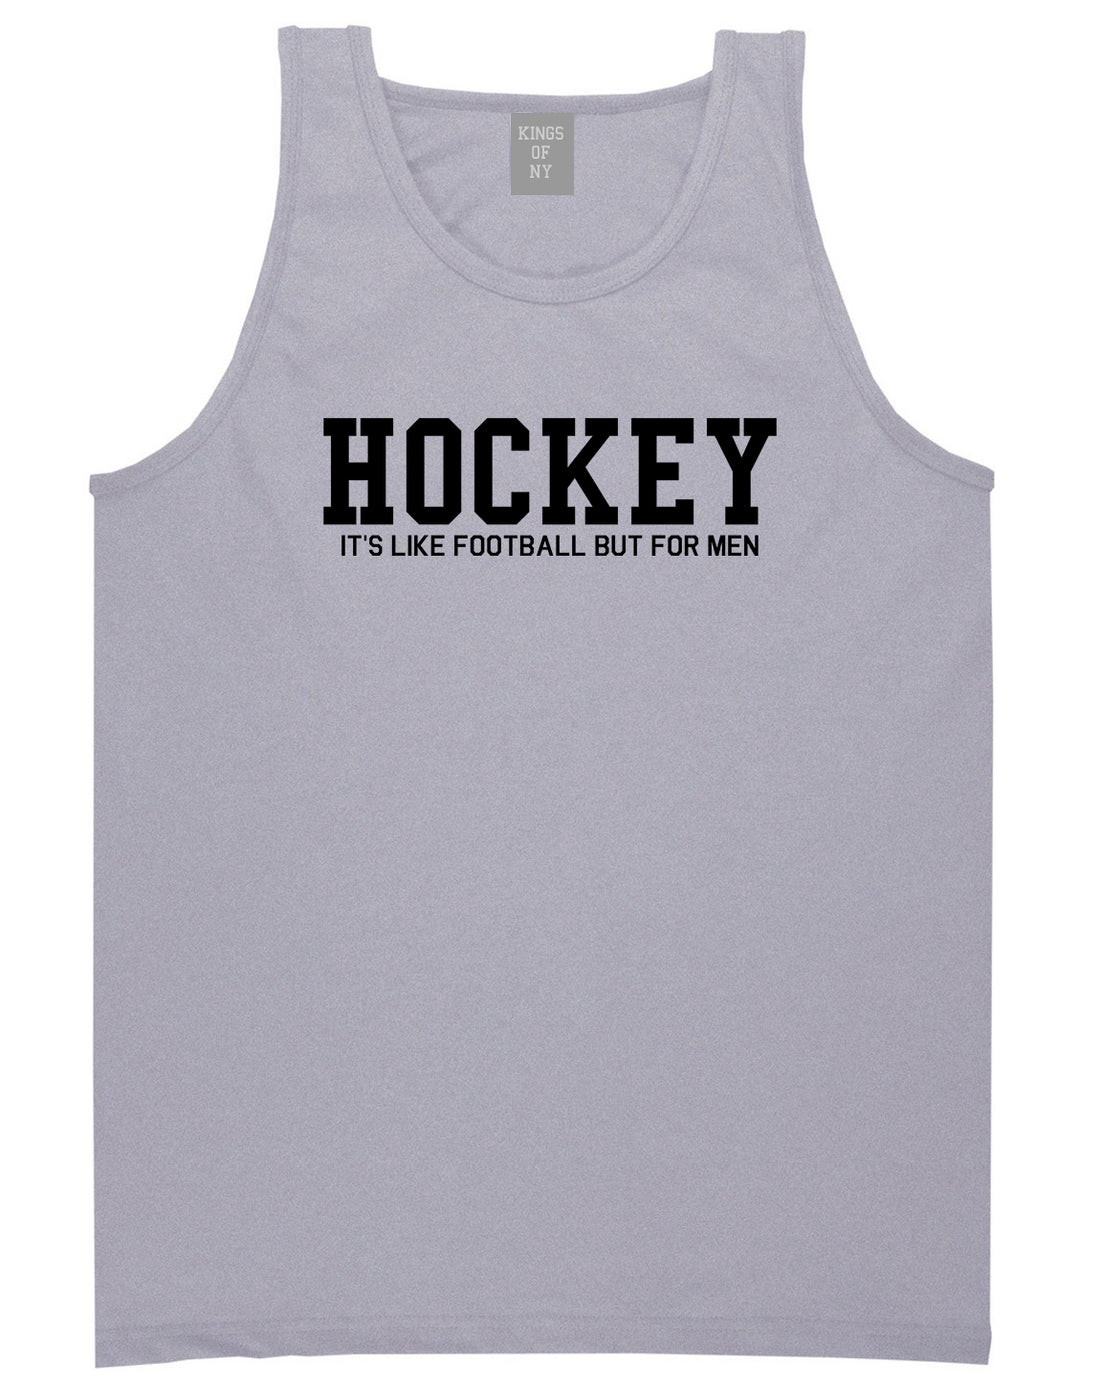 Hockey Its Like Football But For Men Funny Mens Tank Top T-Shirt Grey